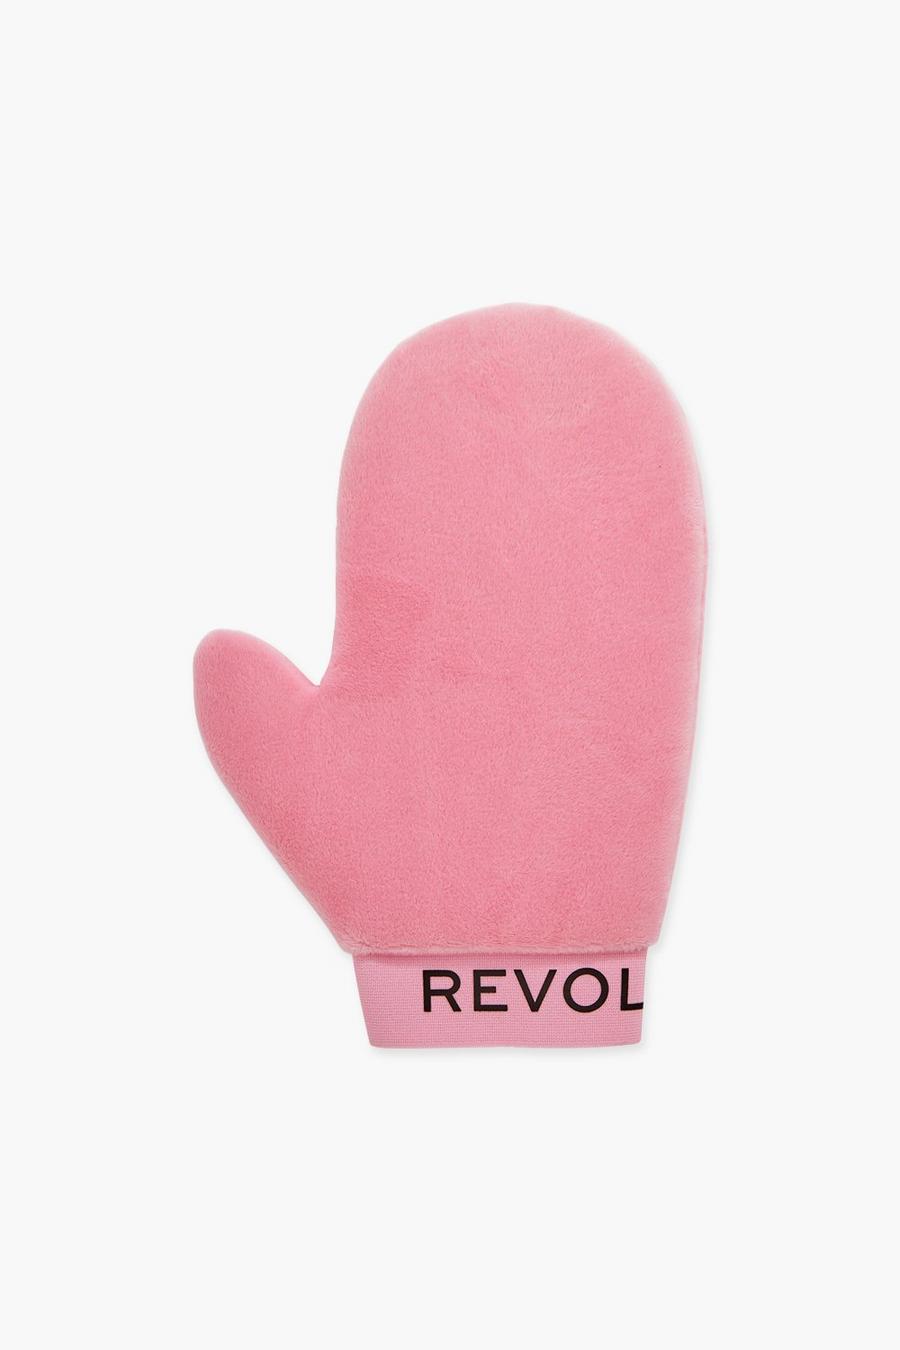 Revolution Beauty - Gant application autobronzant, Pink rose